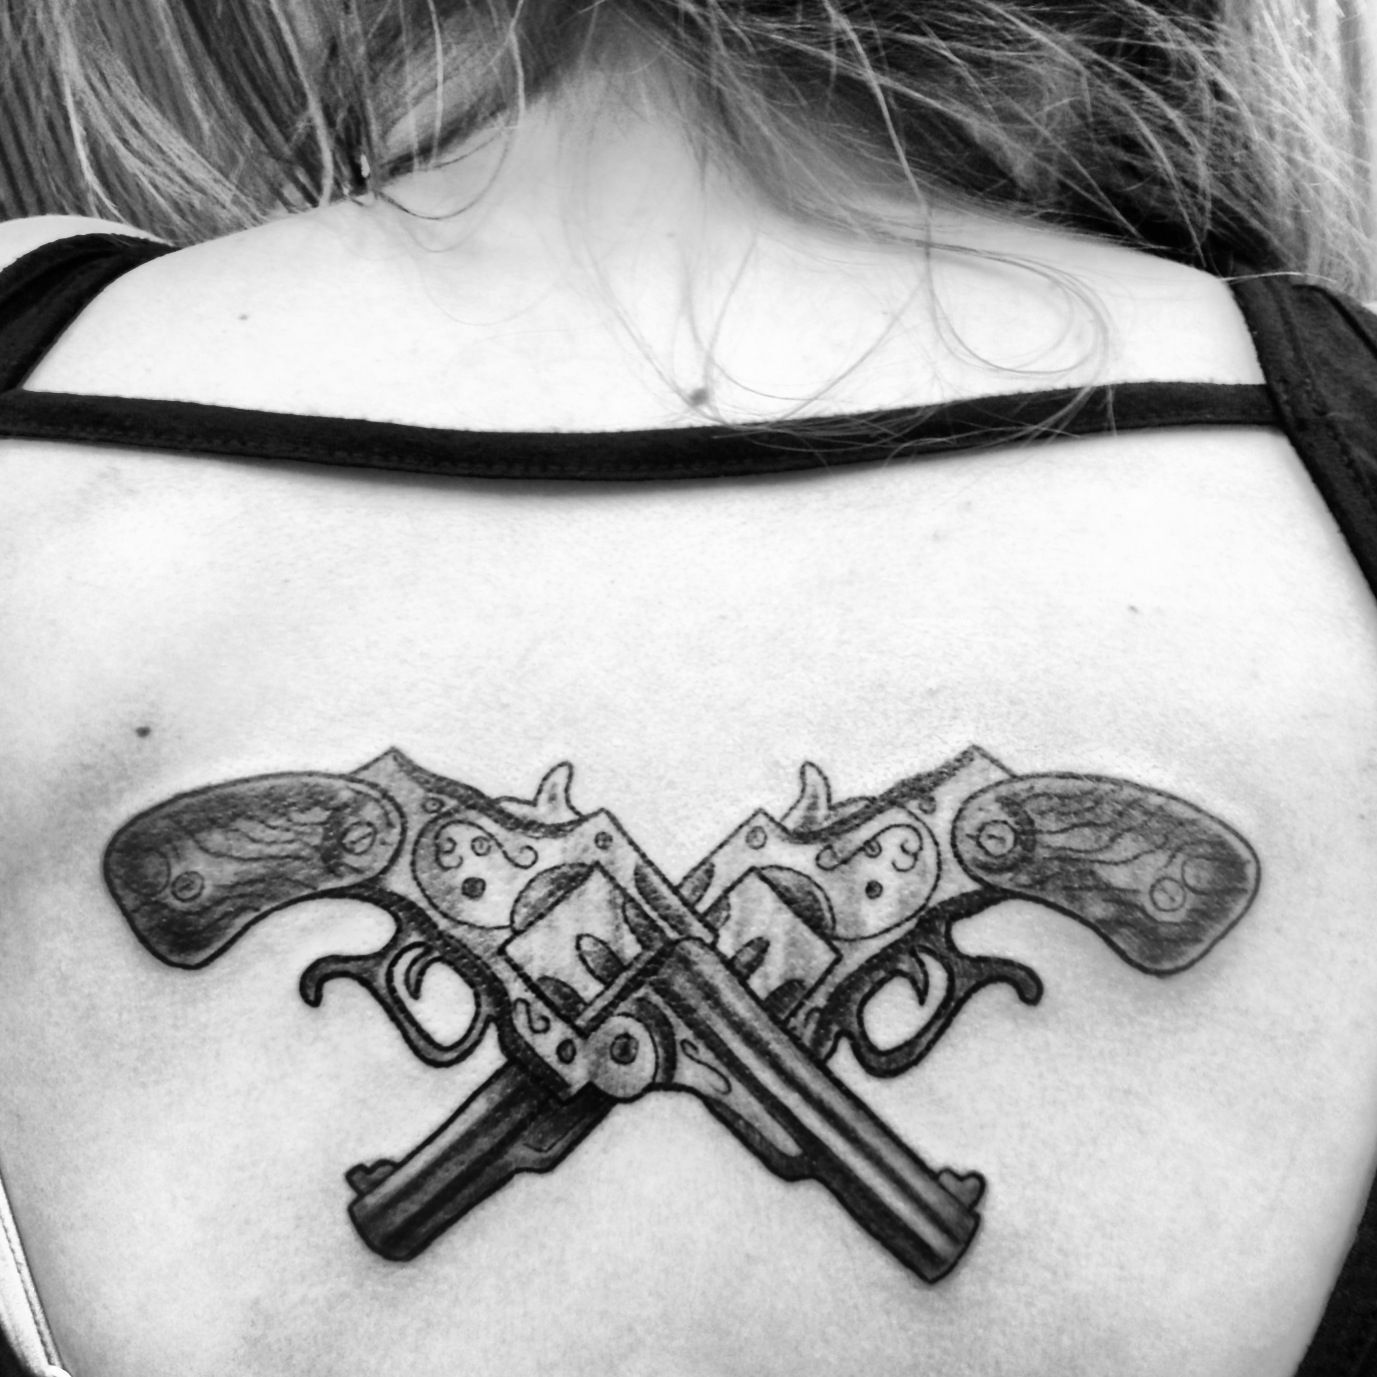 Crossed Pistols Tattoo